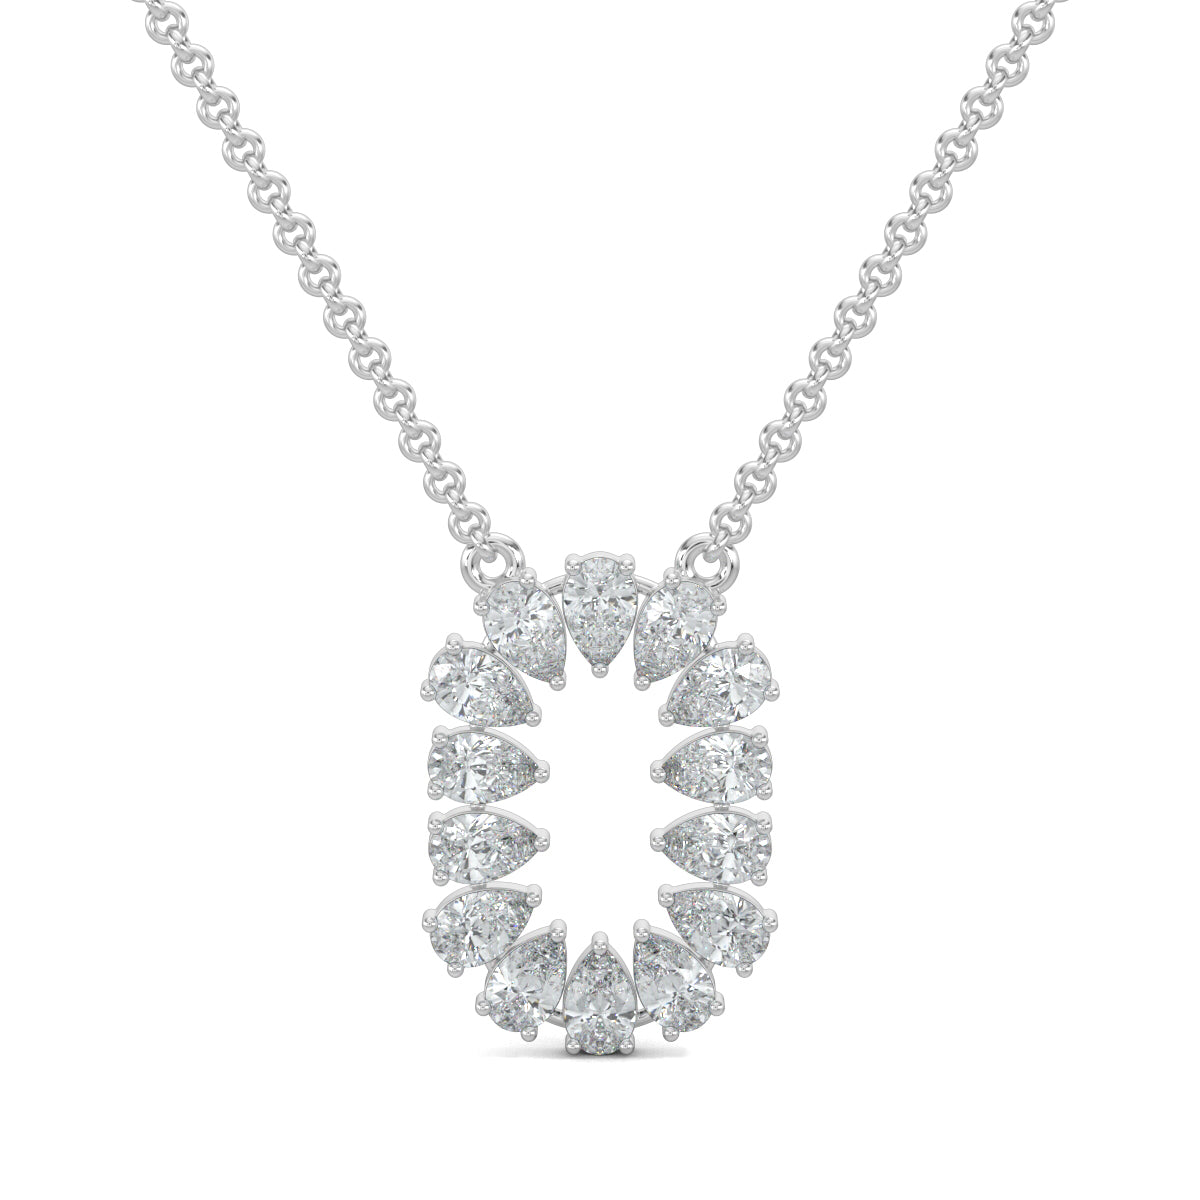 White Gold, Diamond Pendants, Solara Oval Glow pendant, natural diamonds, lab-grown diamonds, casual pendant, pear diamonds, oval-shaped pendant, elegant jewelry, radiant glow